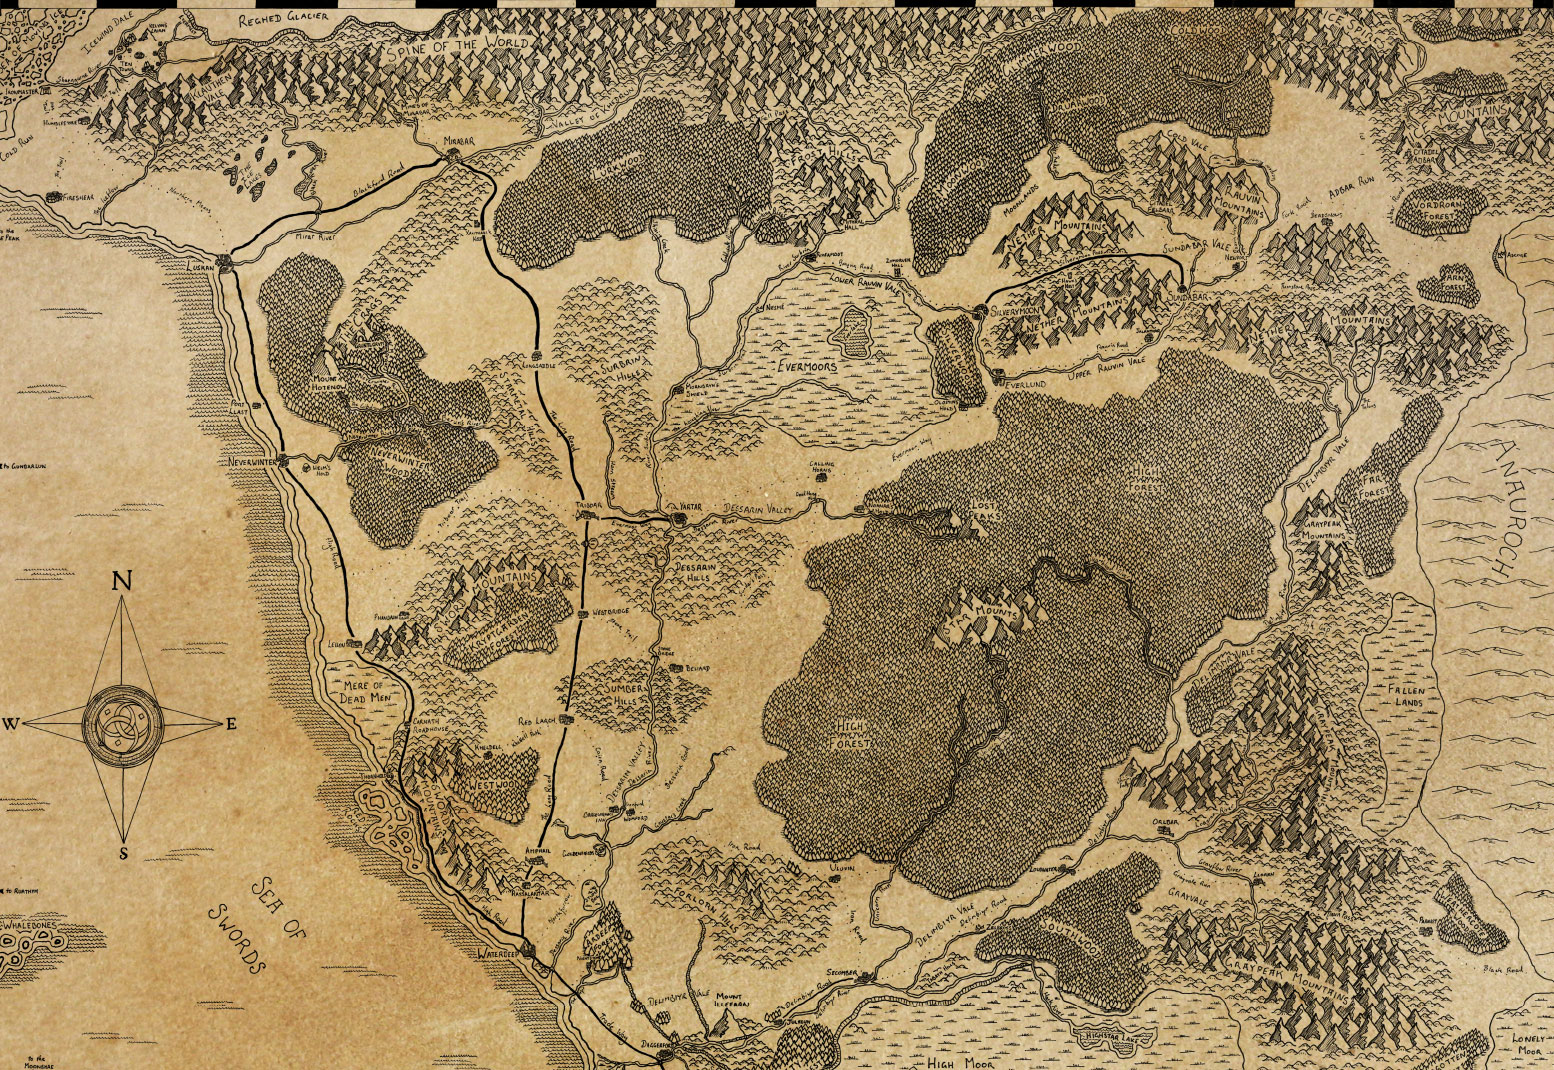 Map of Faerûn